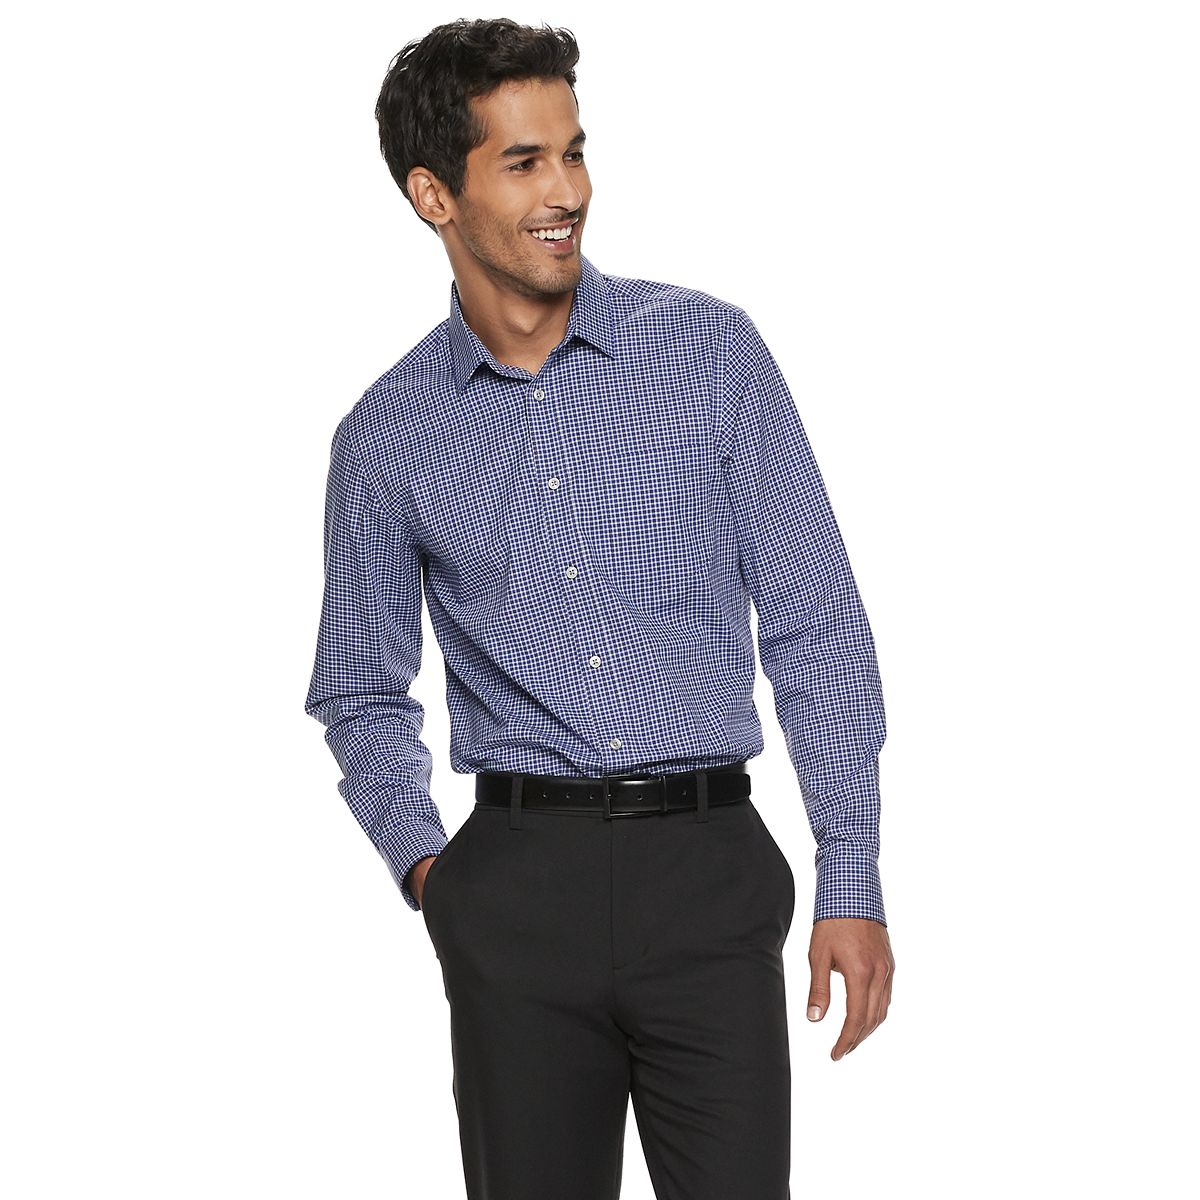 Apt test Monet Men's Slim Fit Dress Shirts: Add On-Trend Appeal to Your Formal Wardrobe |  Kohl's